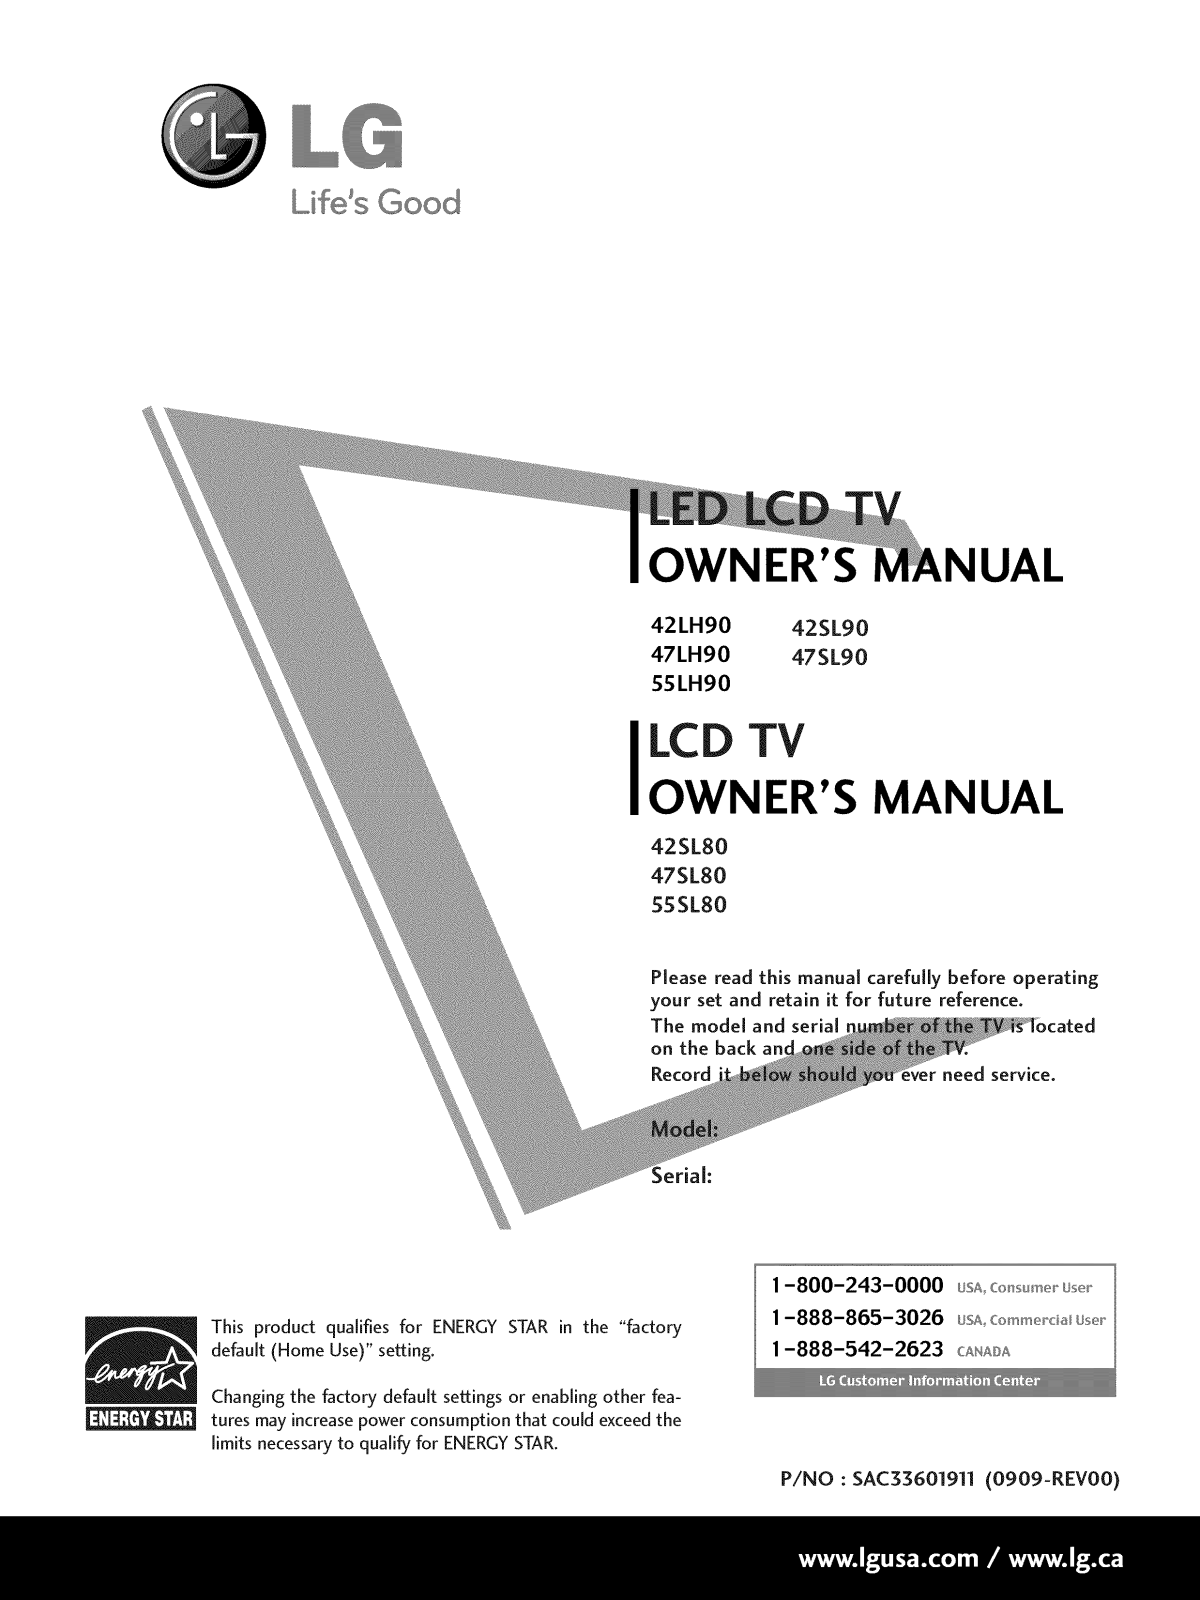 LG 55LH90, 47SL80, 42LH90 Owner’s Manual